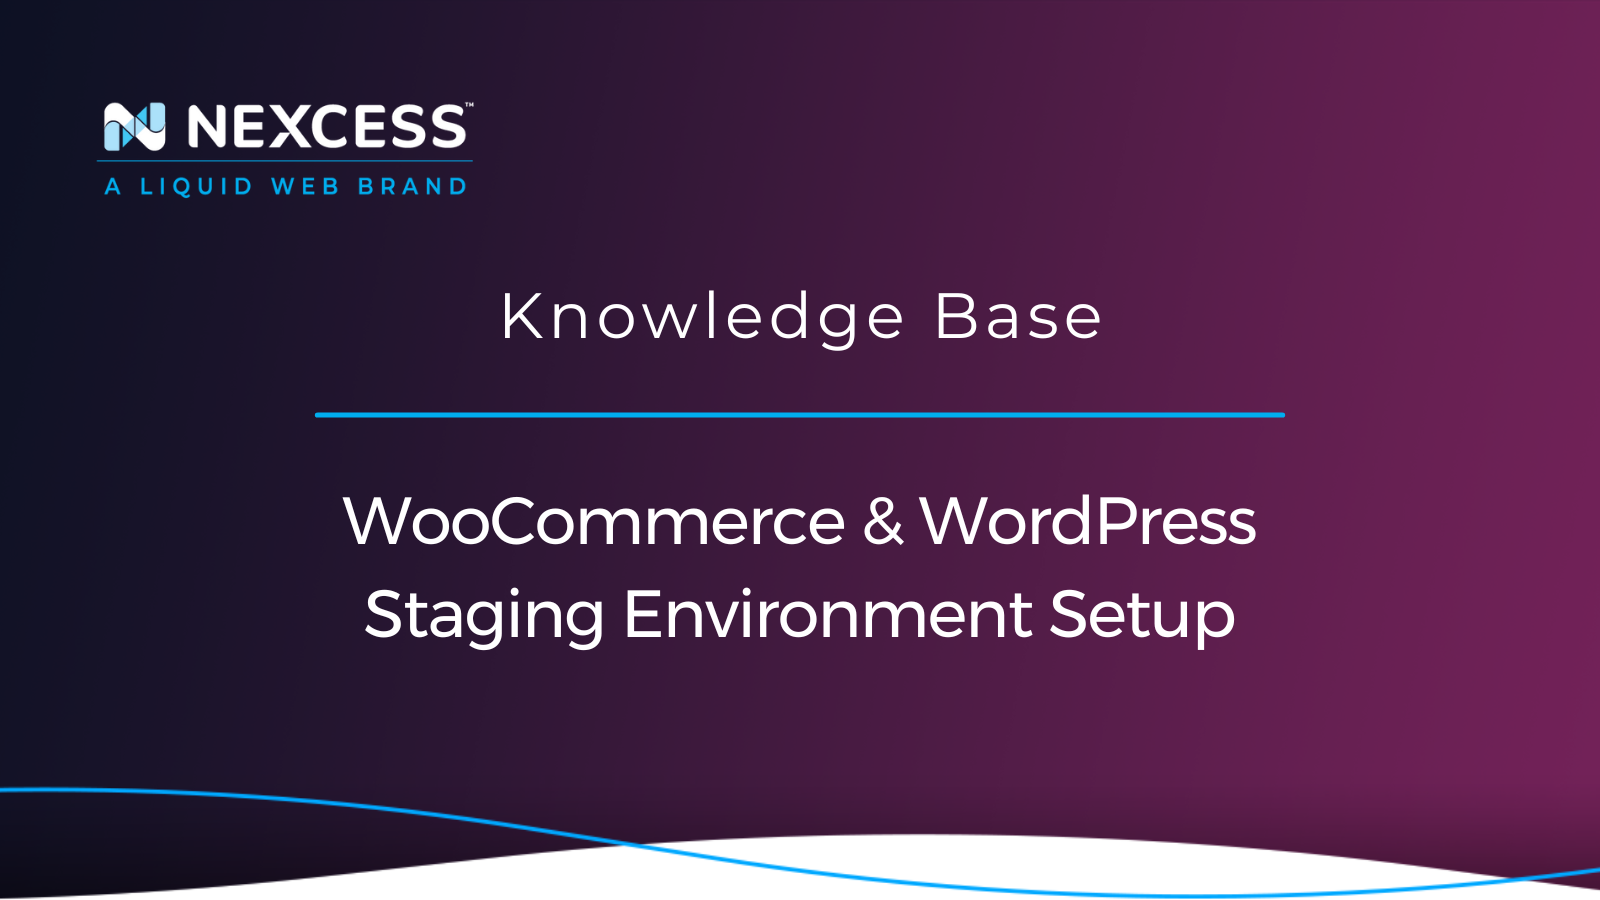 WooCommerce & WordPress Staging Environment Setup